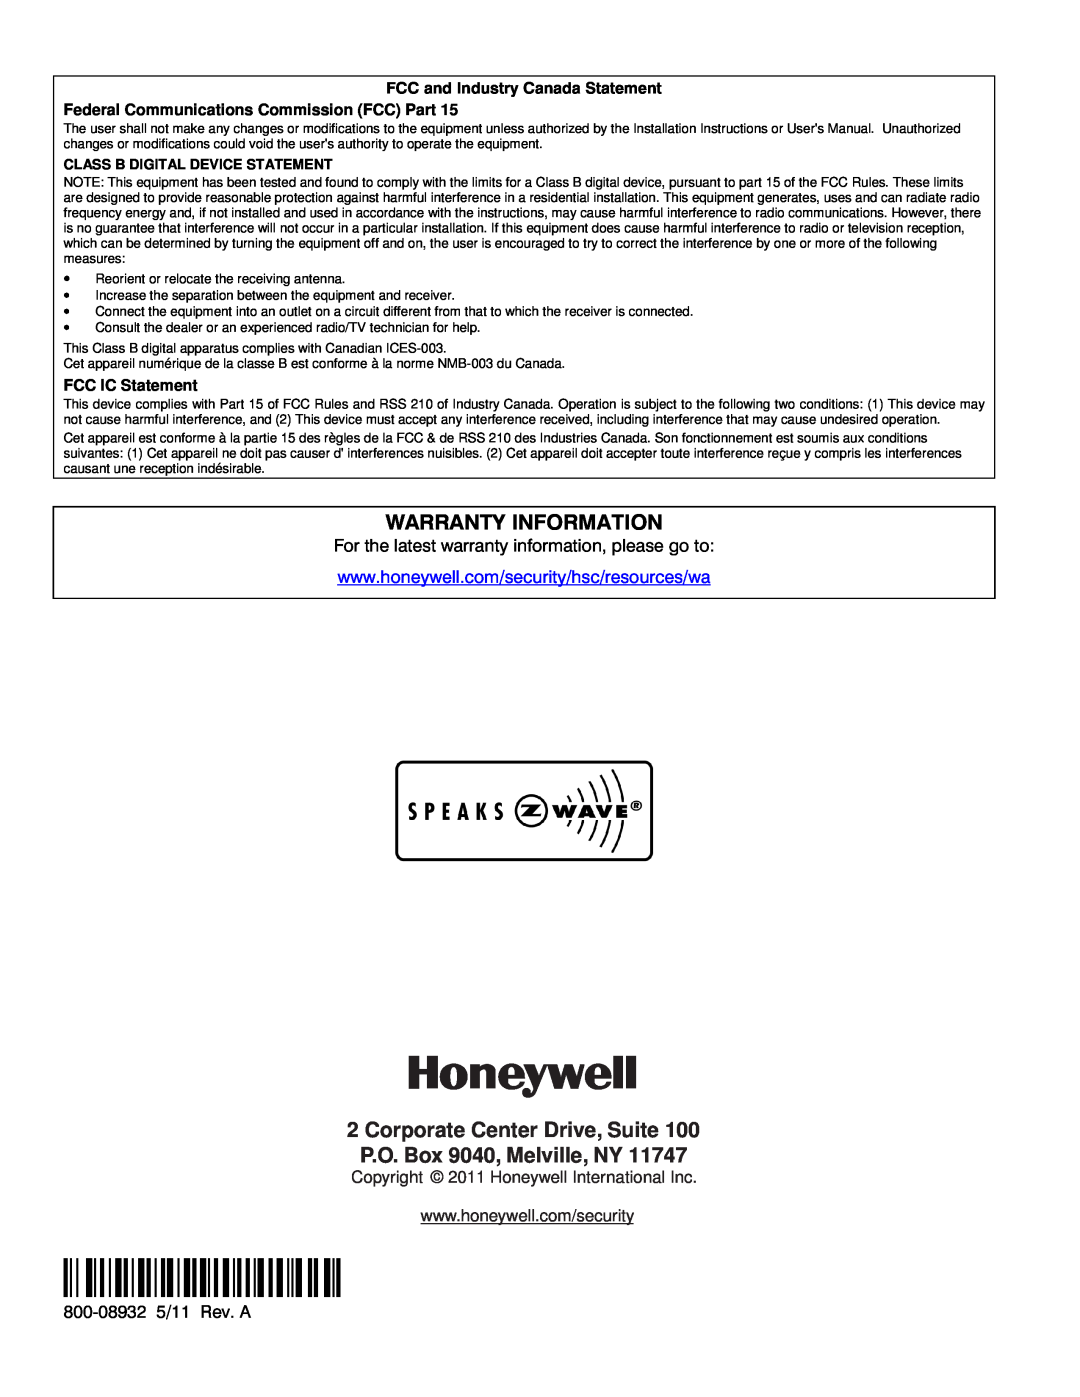 Honeywell 5800ZBRIDGE Ê800-08932NŠ, Warranty Information, Corporate Center Drive, Suite, P.O. Box 9040, Melville, NY 